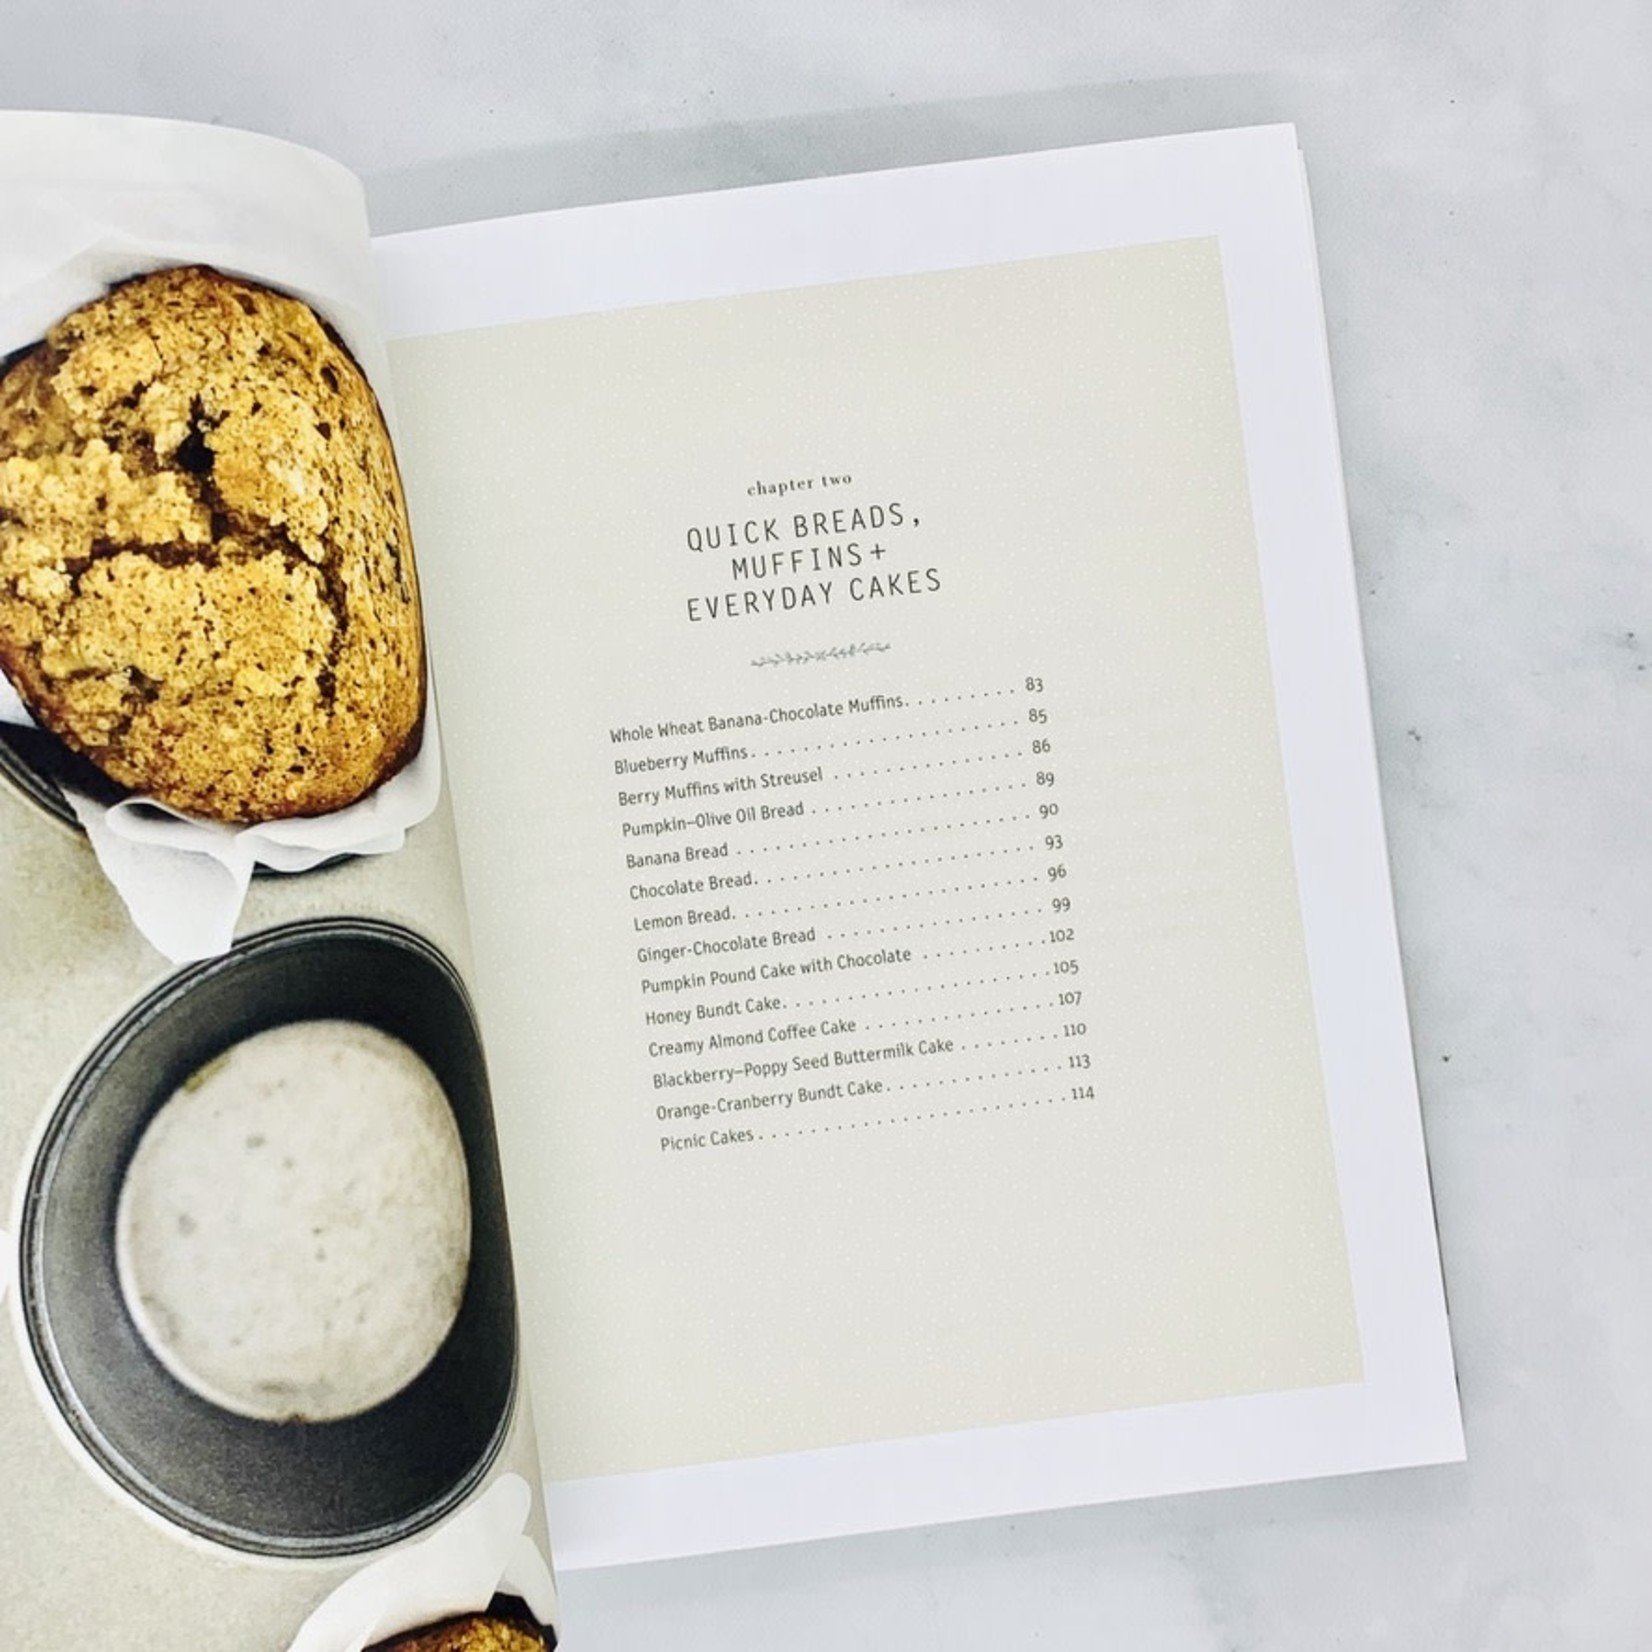 Vanilla Bean Baking Book